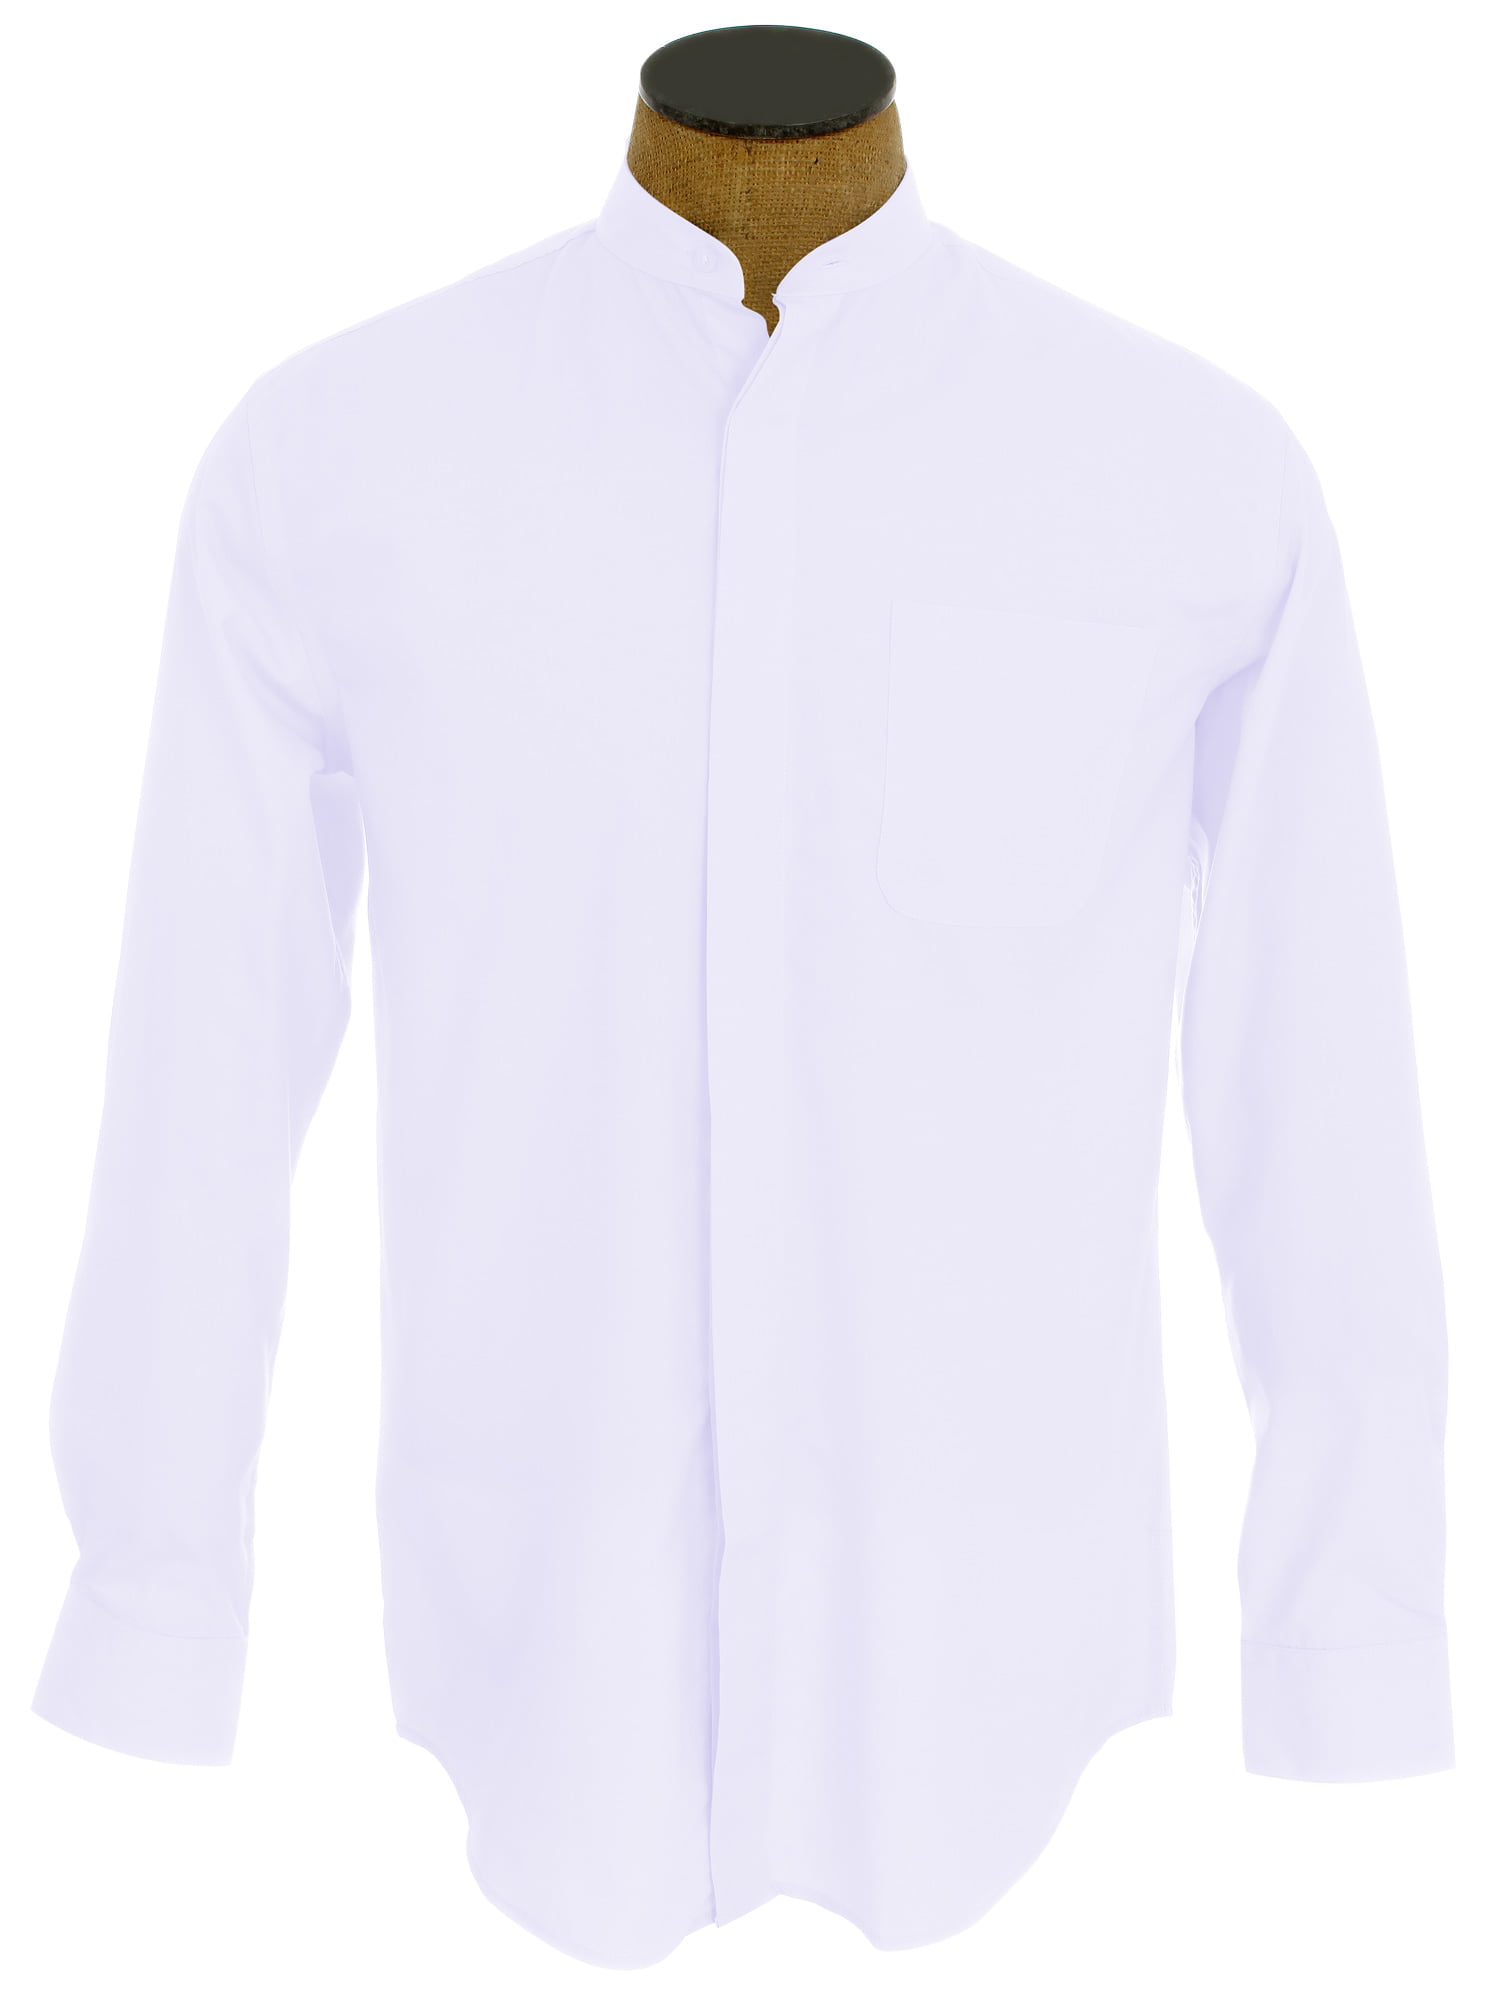 Men's Collarless Banded Collar Dress Shirt - Walmart.com